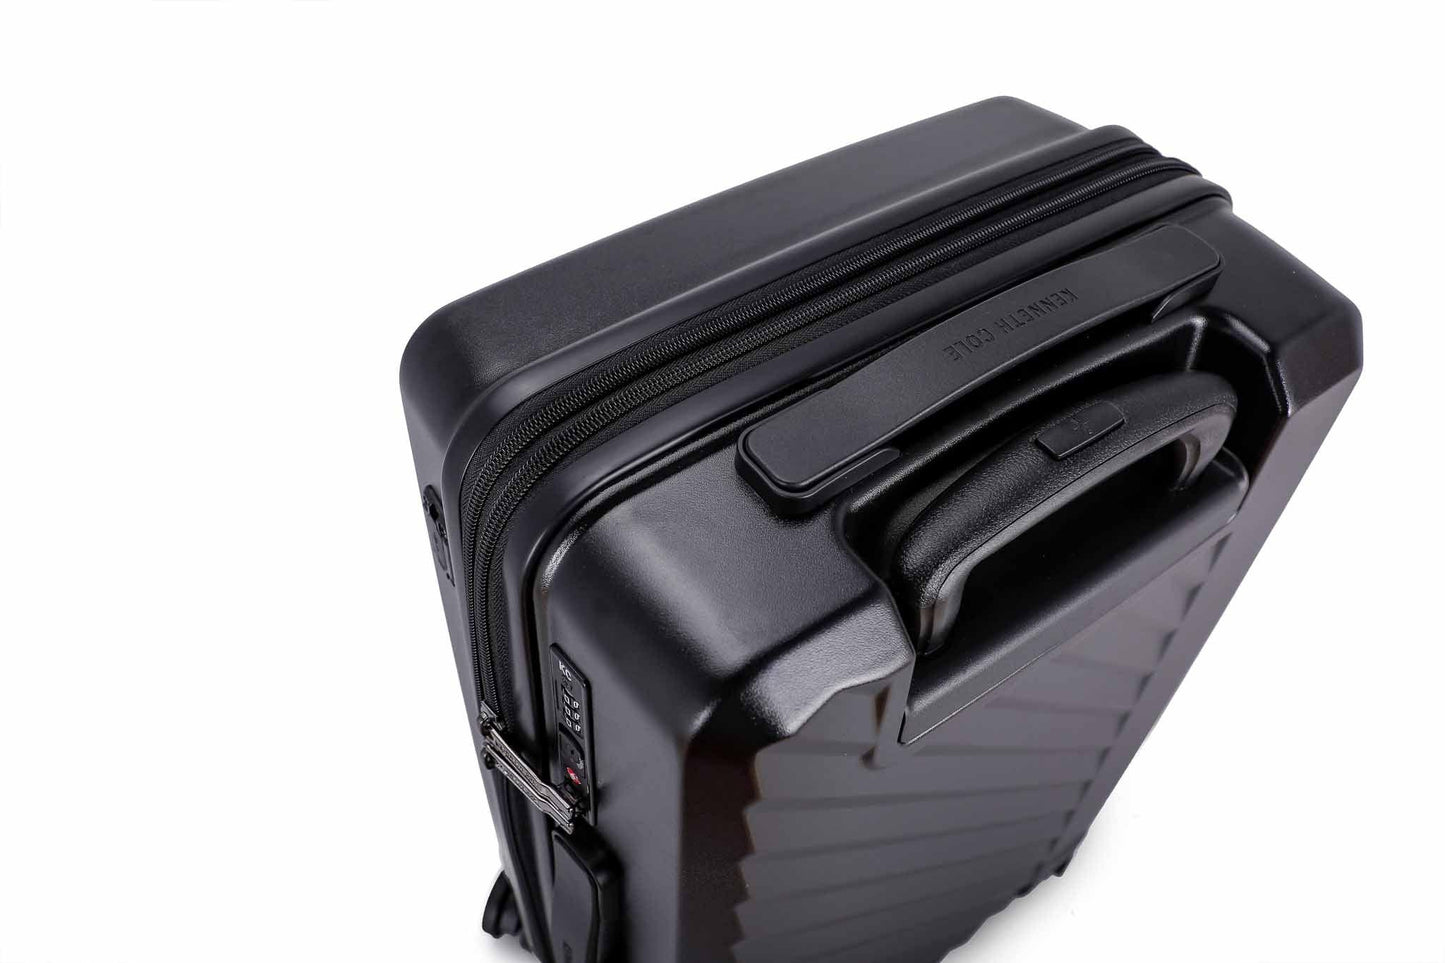 KENNETH COLE - מזוודה קשיחה בינונית 24" MANHATTAN בצבע שחור - MASHBIR//365